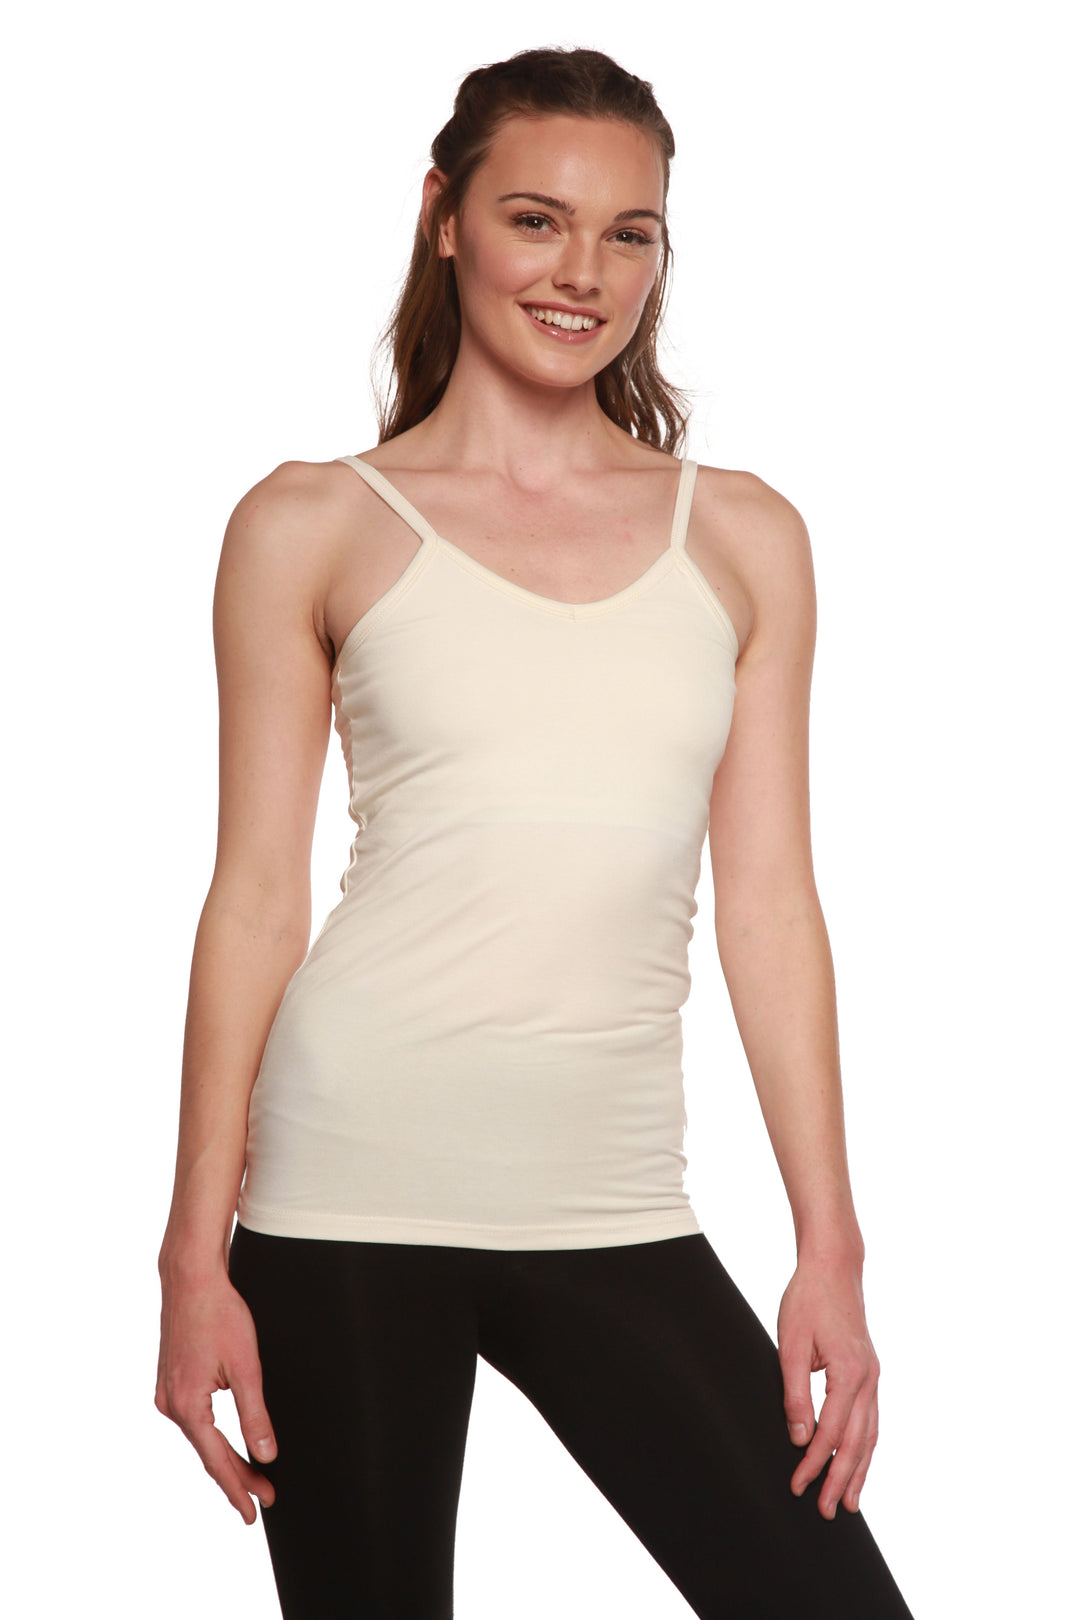 Women Sleeveless Tank Tops Camisole With Built in Shelf Bra Vest